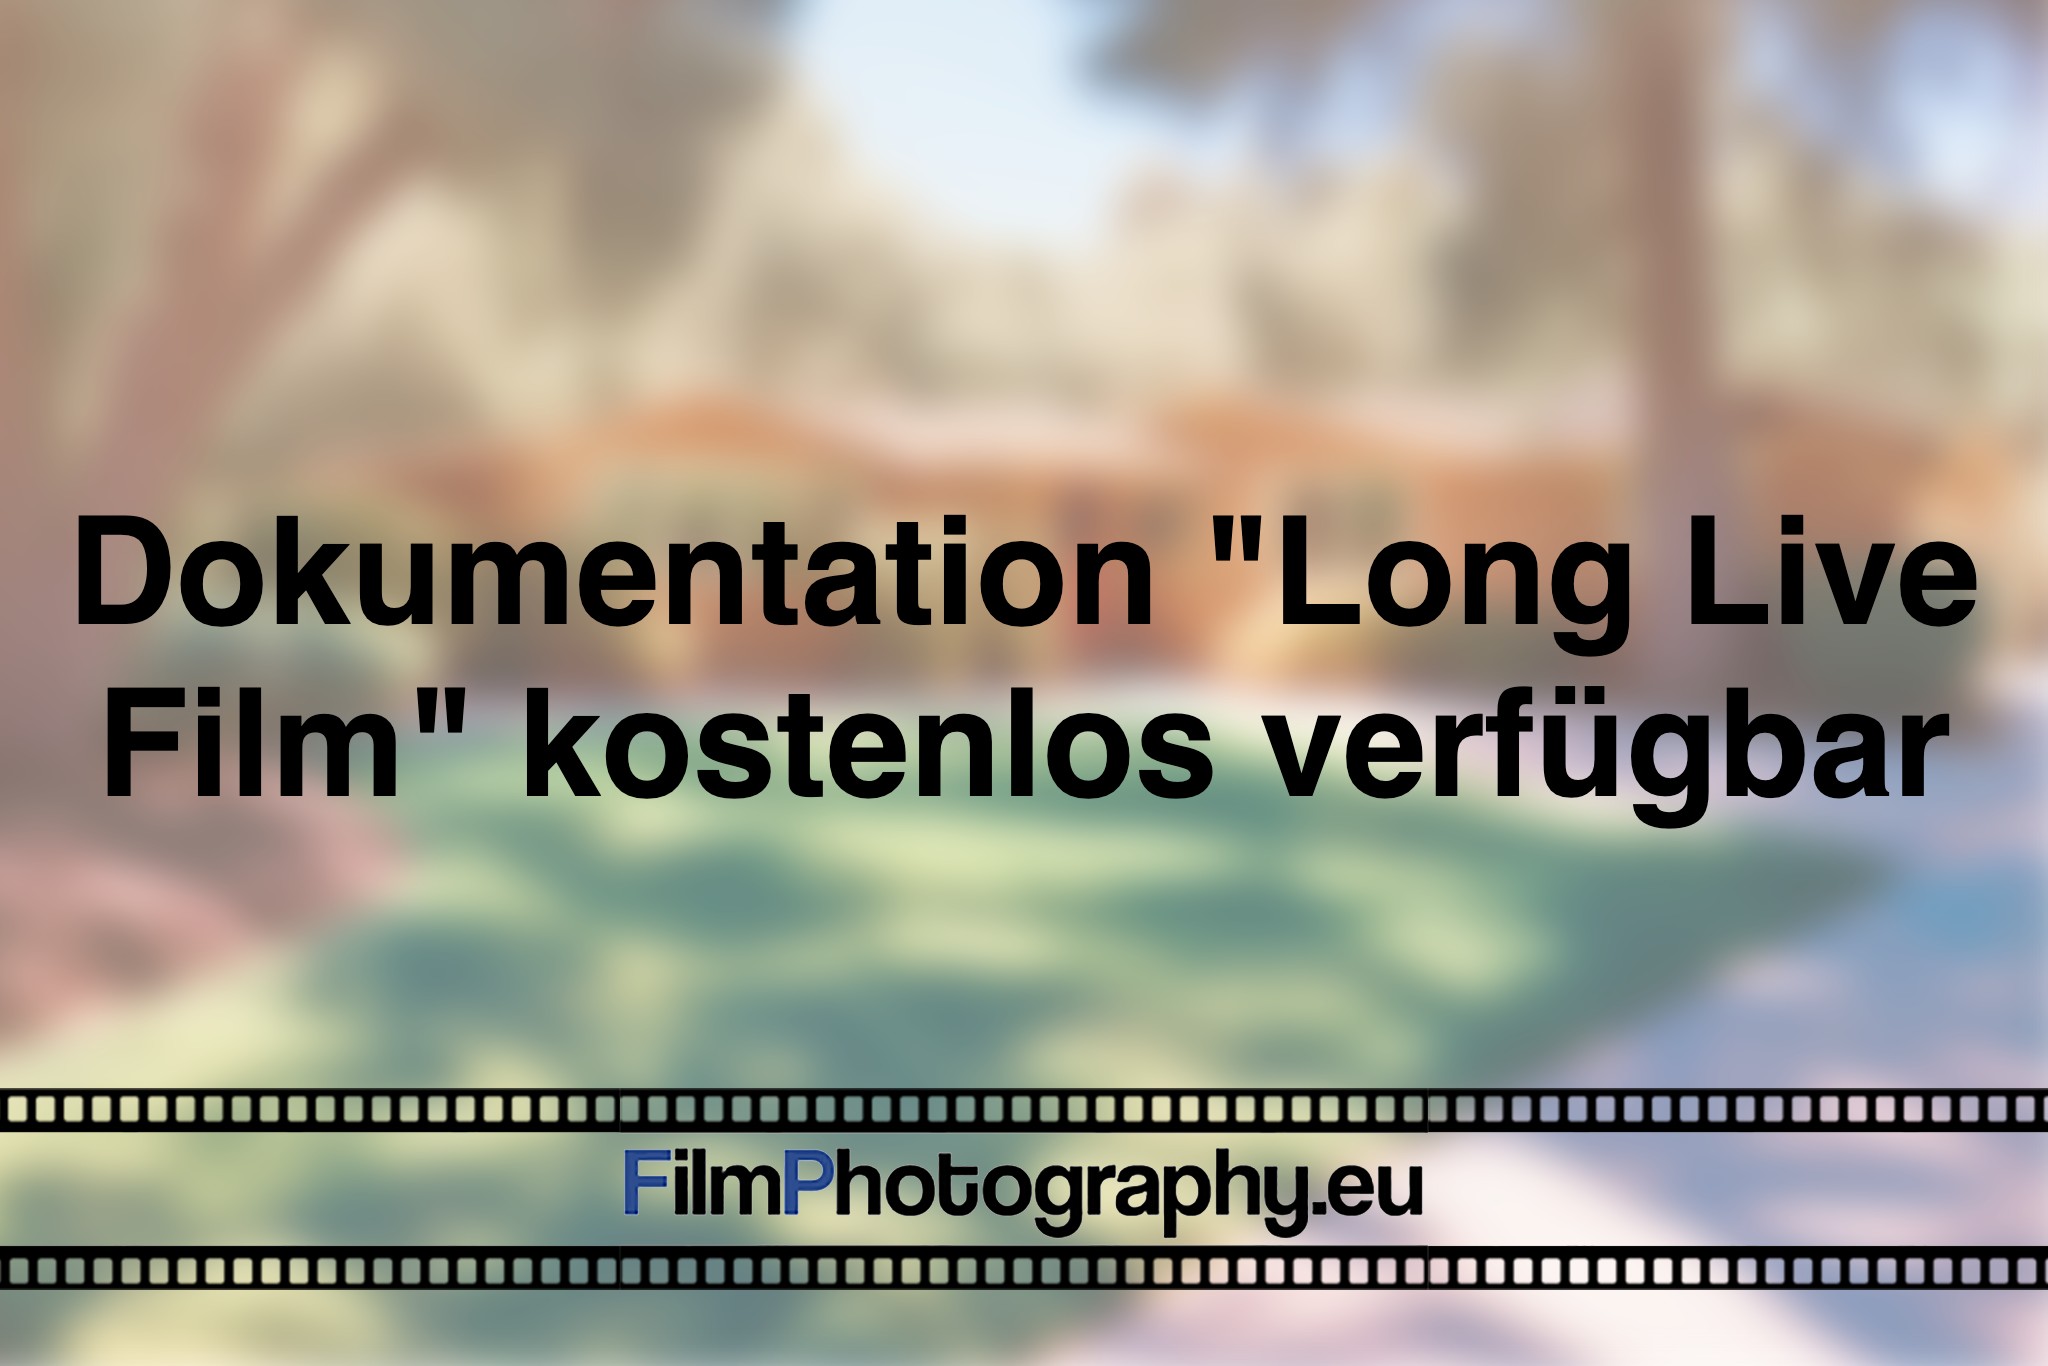 dokumentation-long-live-film-kostenlos-verfuegbar-photo-bnv